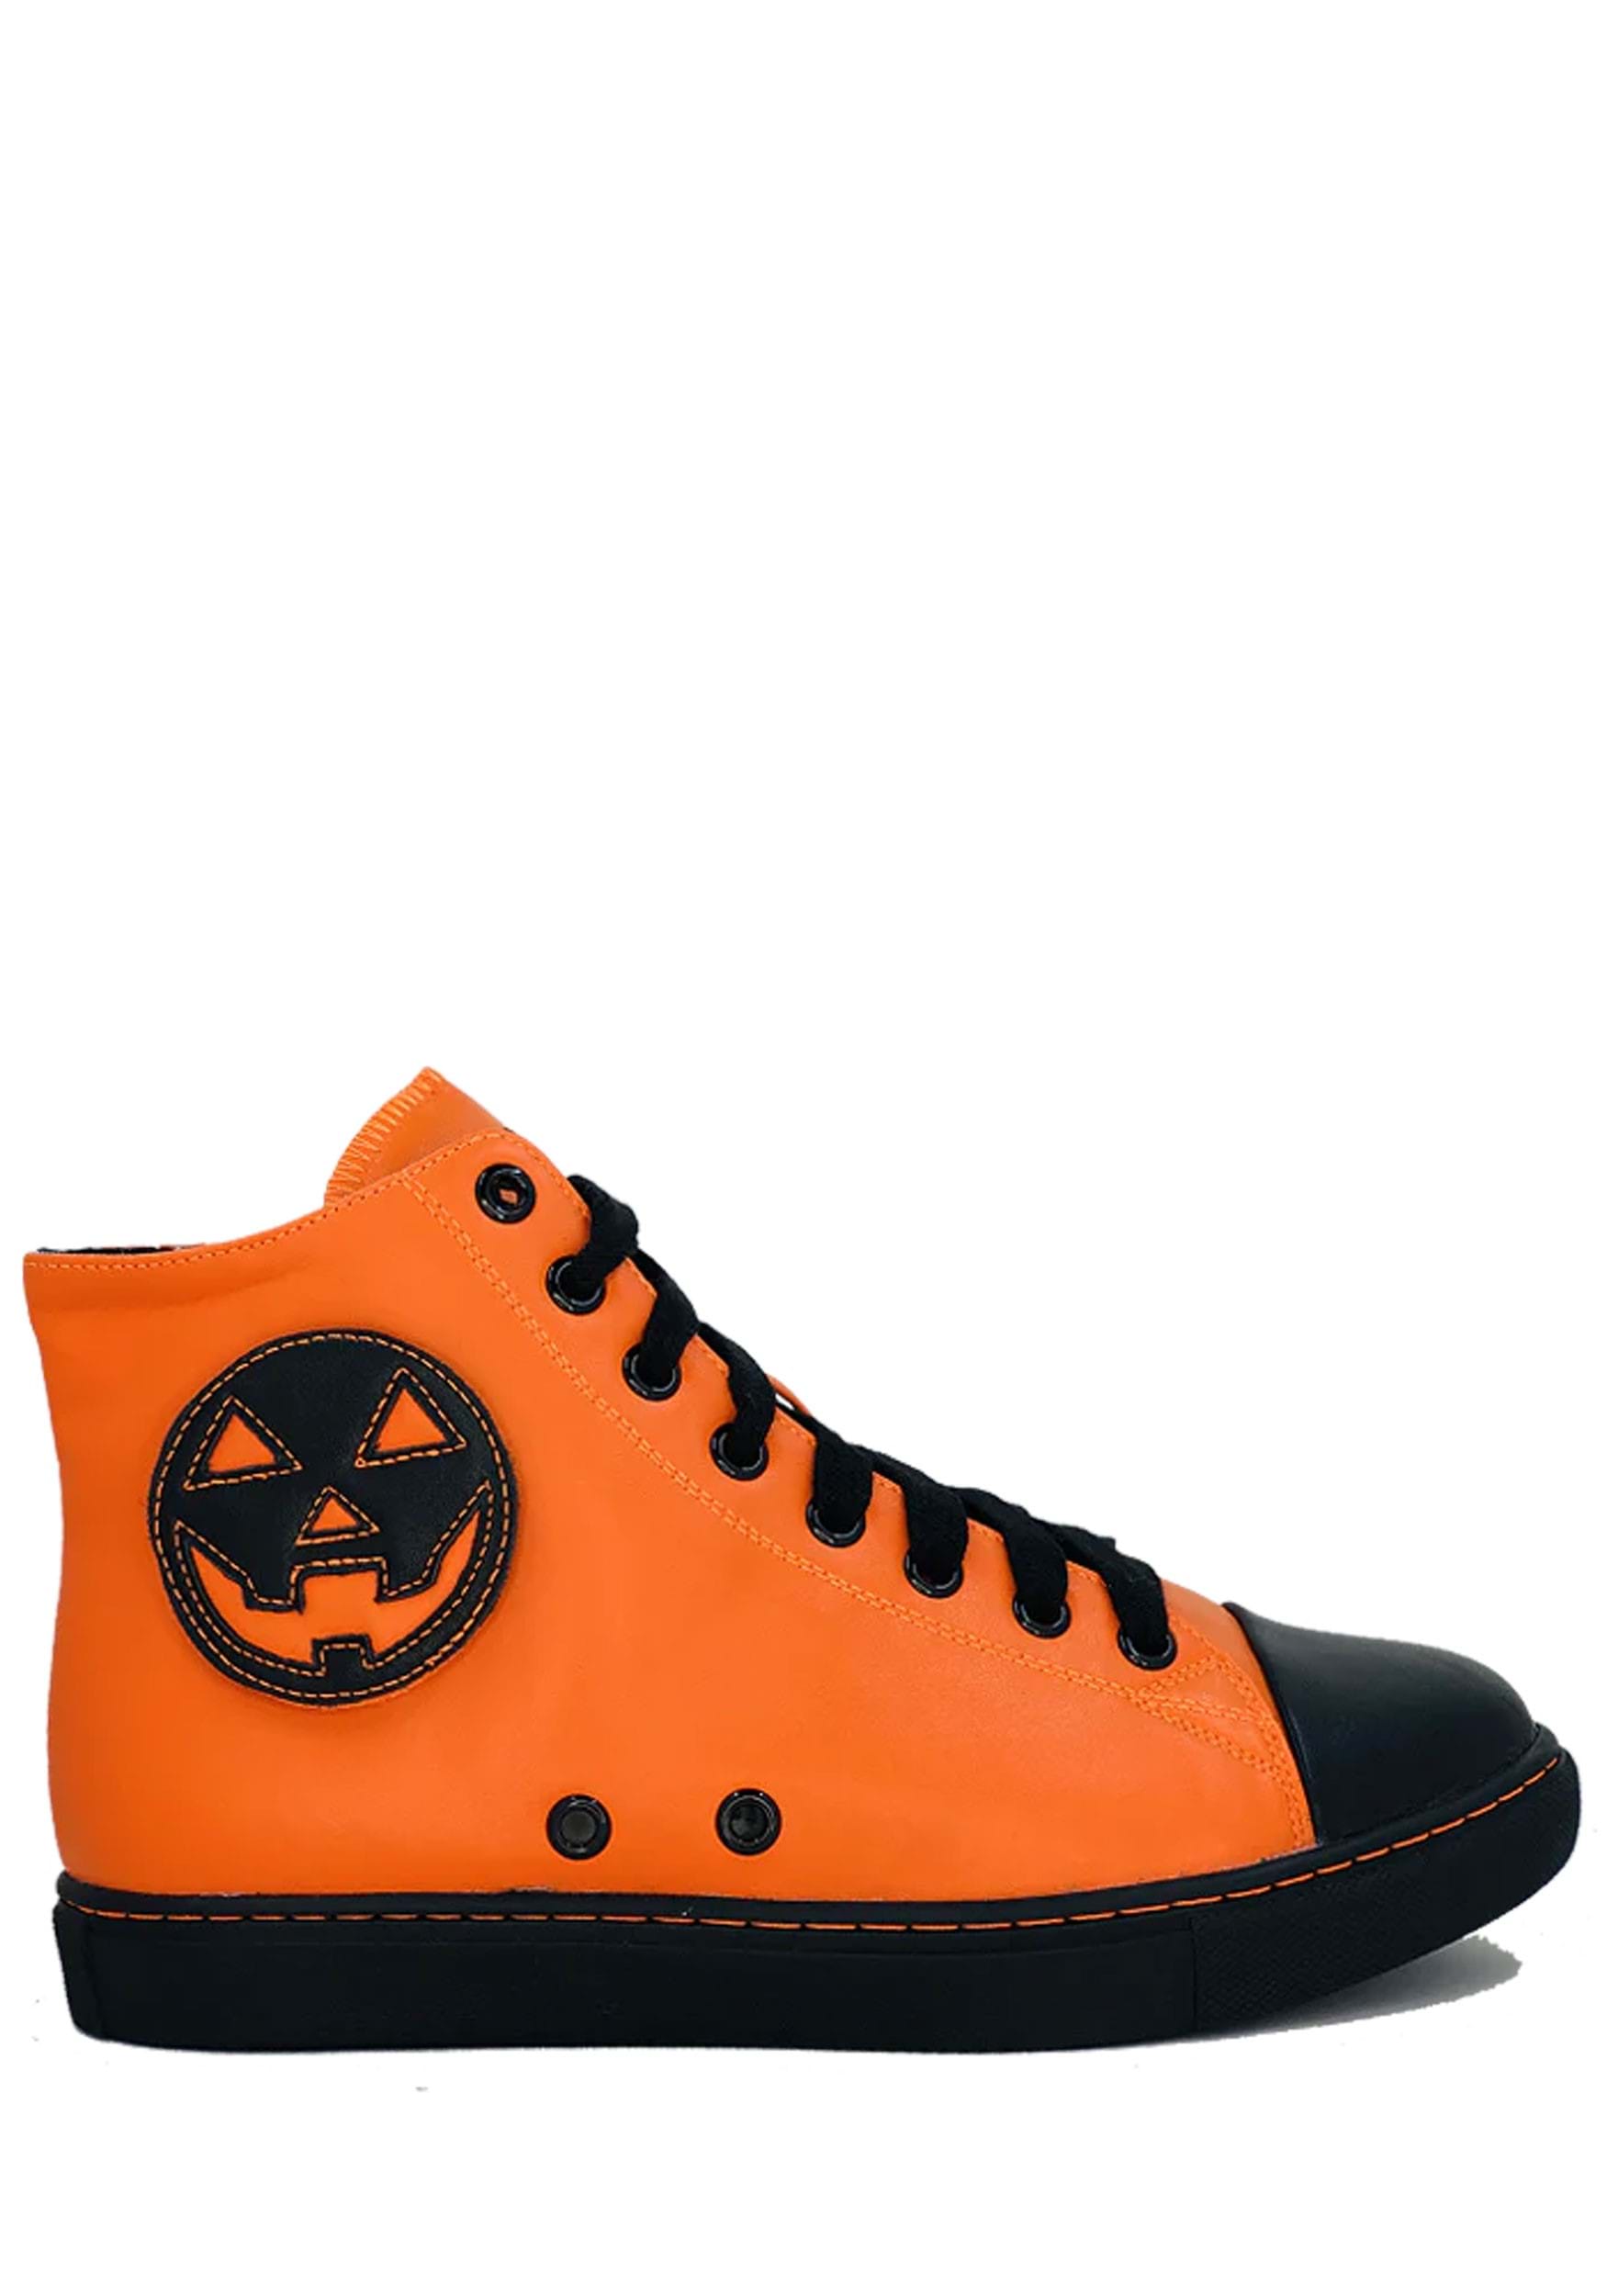 Image of Women's Orange Pumpkin Chelsea Jack High Top Sneaker | Halloween Footwear ID SVCHELSEAJACK-OR-12